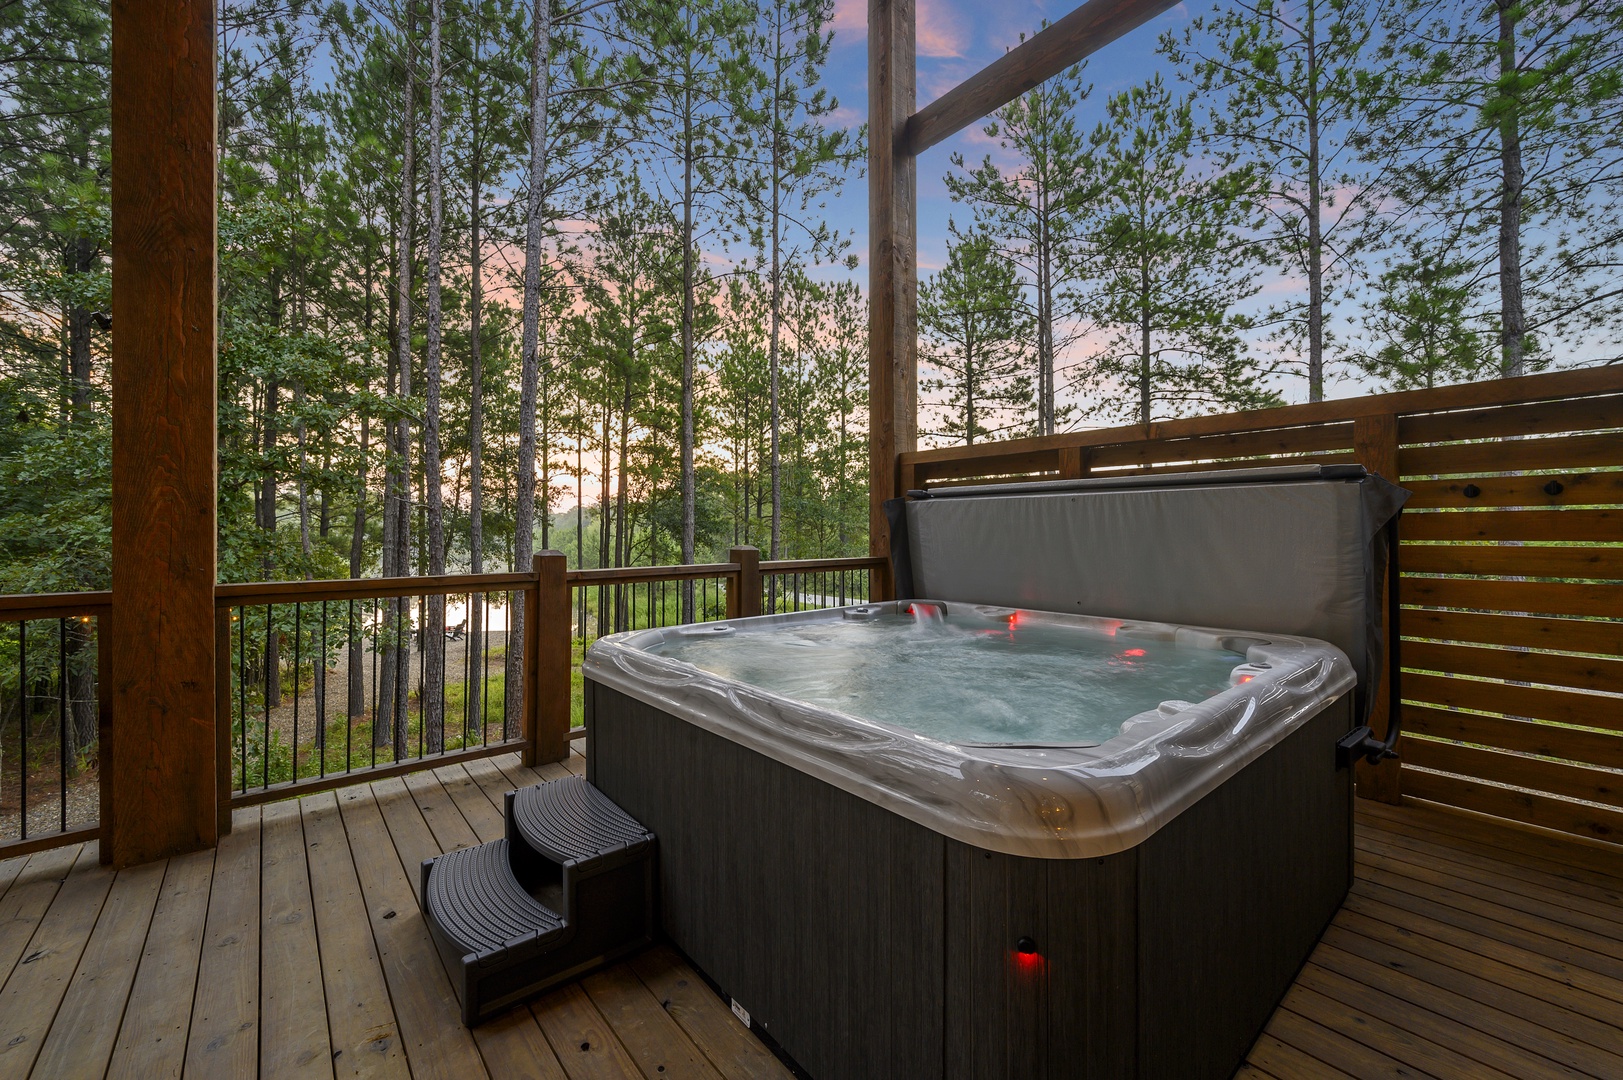 Enjoy a relaxing soak in the hot tub